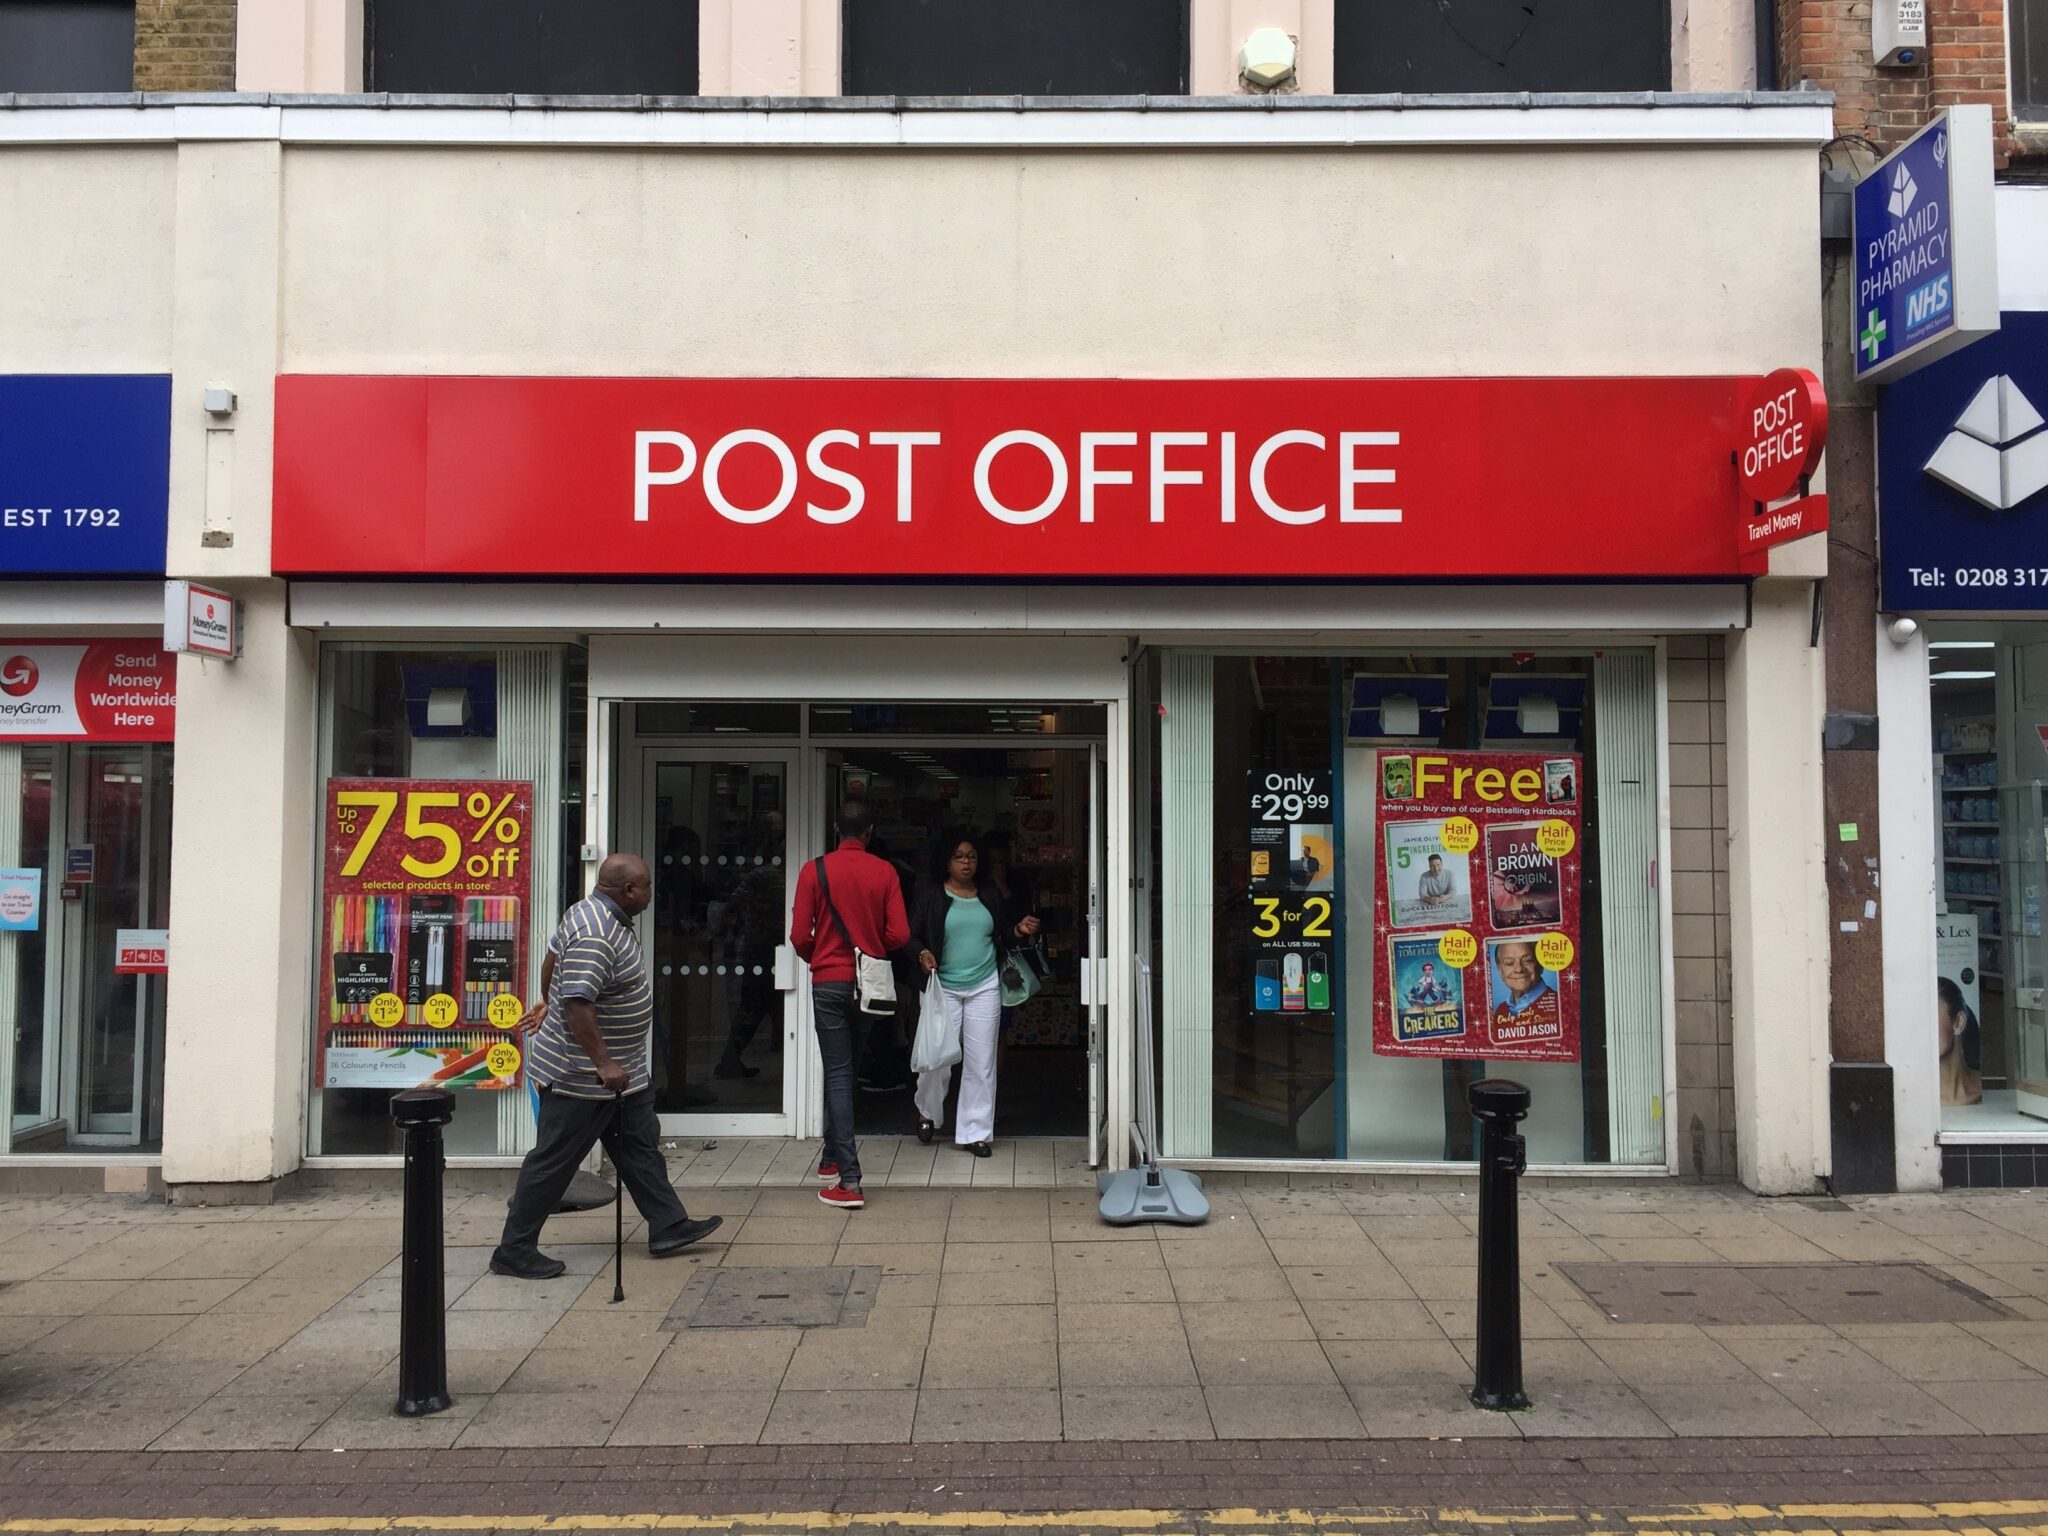 Фото Post Office in London. Amazon Post Office. October London. CITIZENCARD Post Office uk. Post address